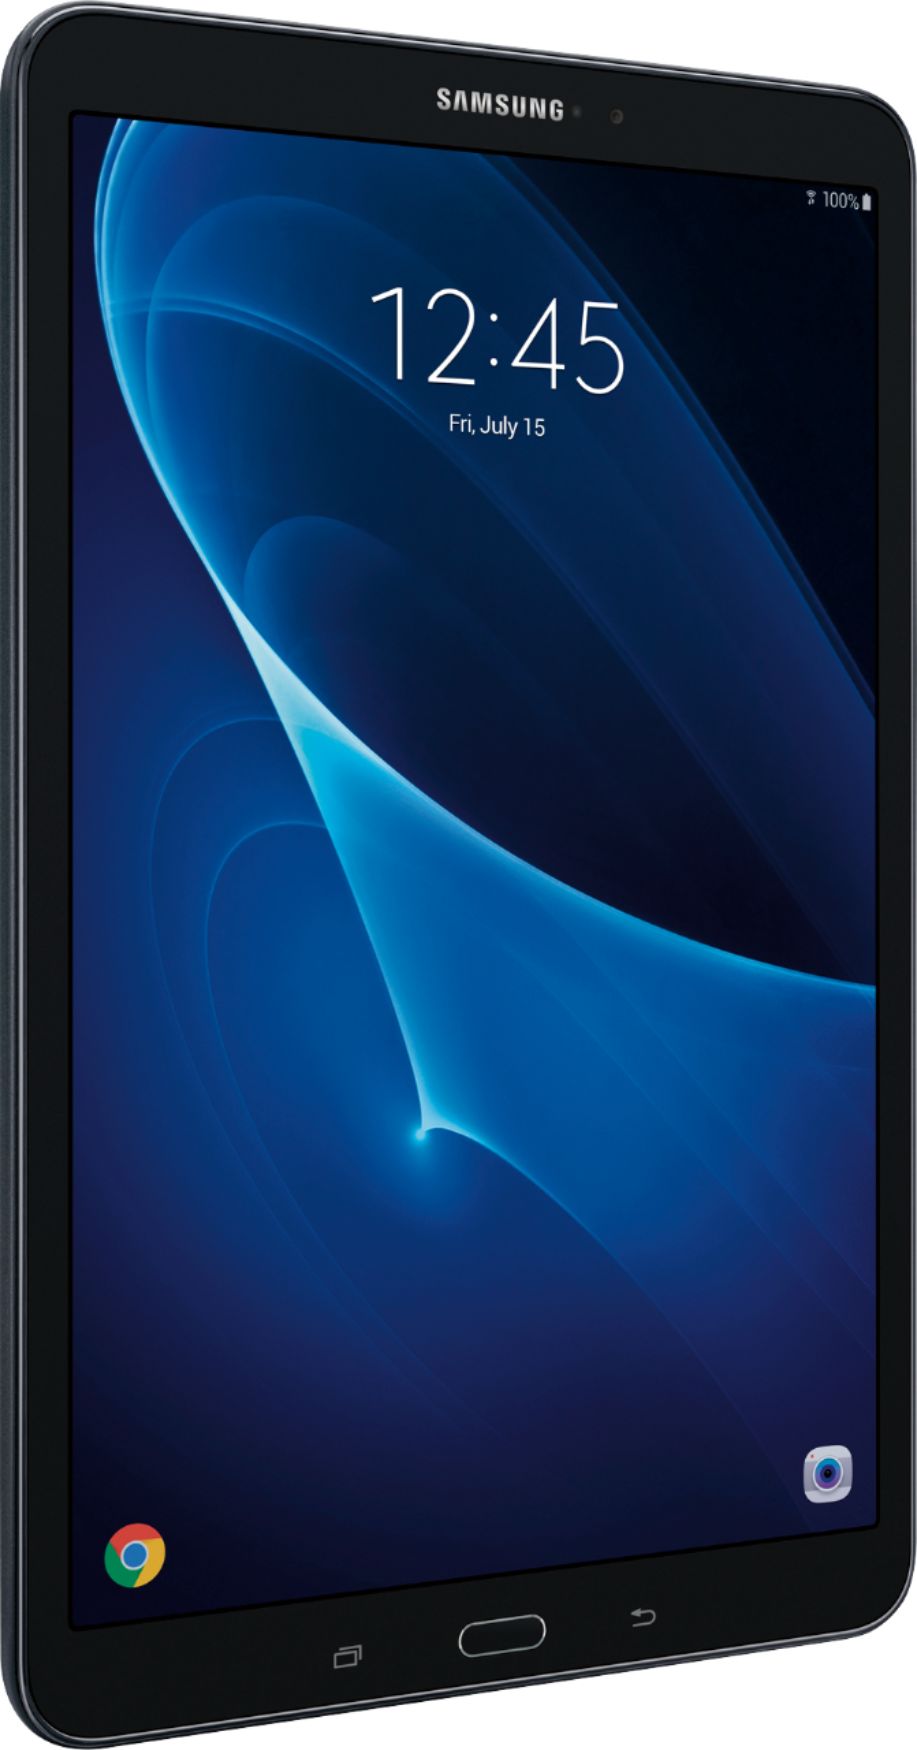 Keer terug Gezamenlijk leerplan Samsung Galaxy Tab A 10.1" 16GB Black SM-T580NZKAXAR - Best Buy